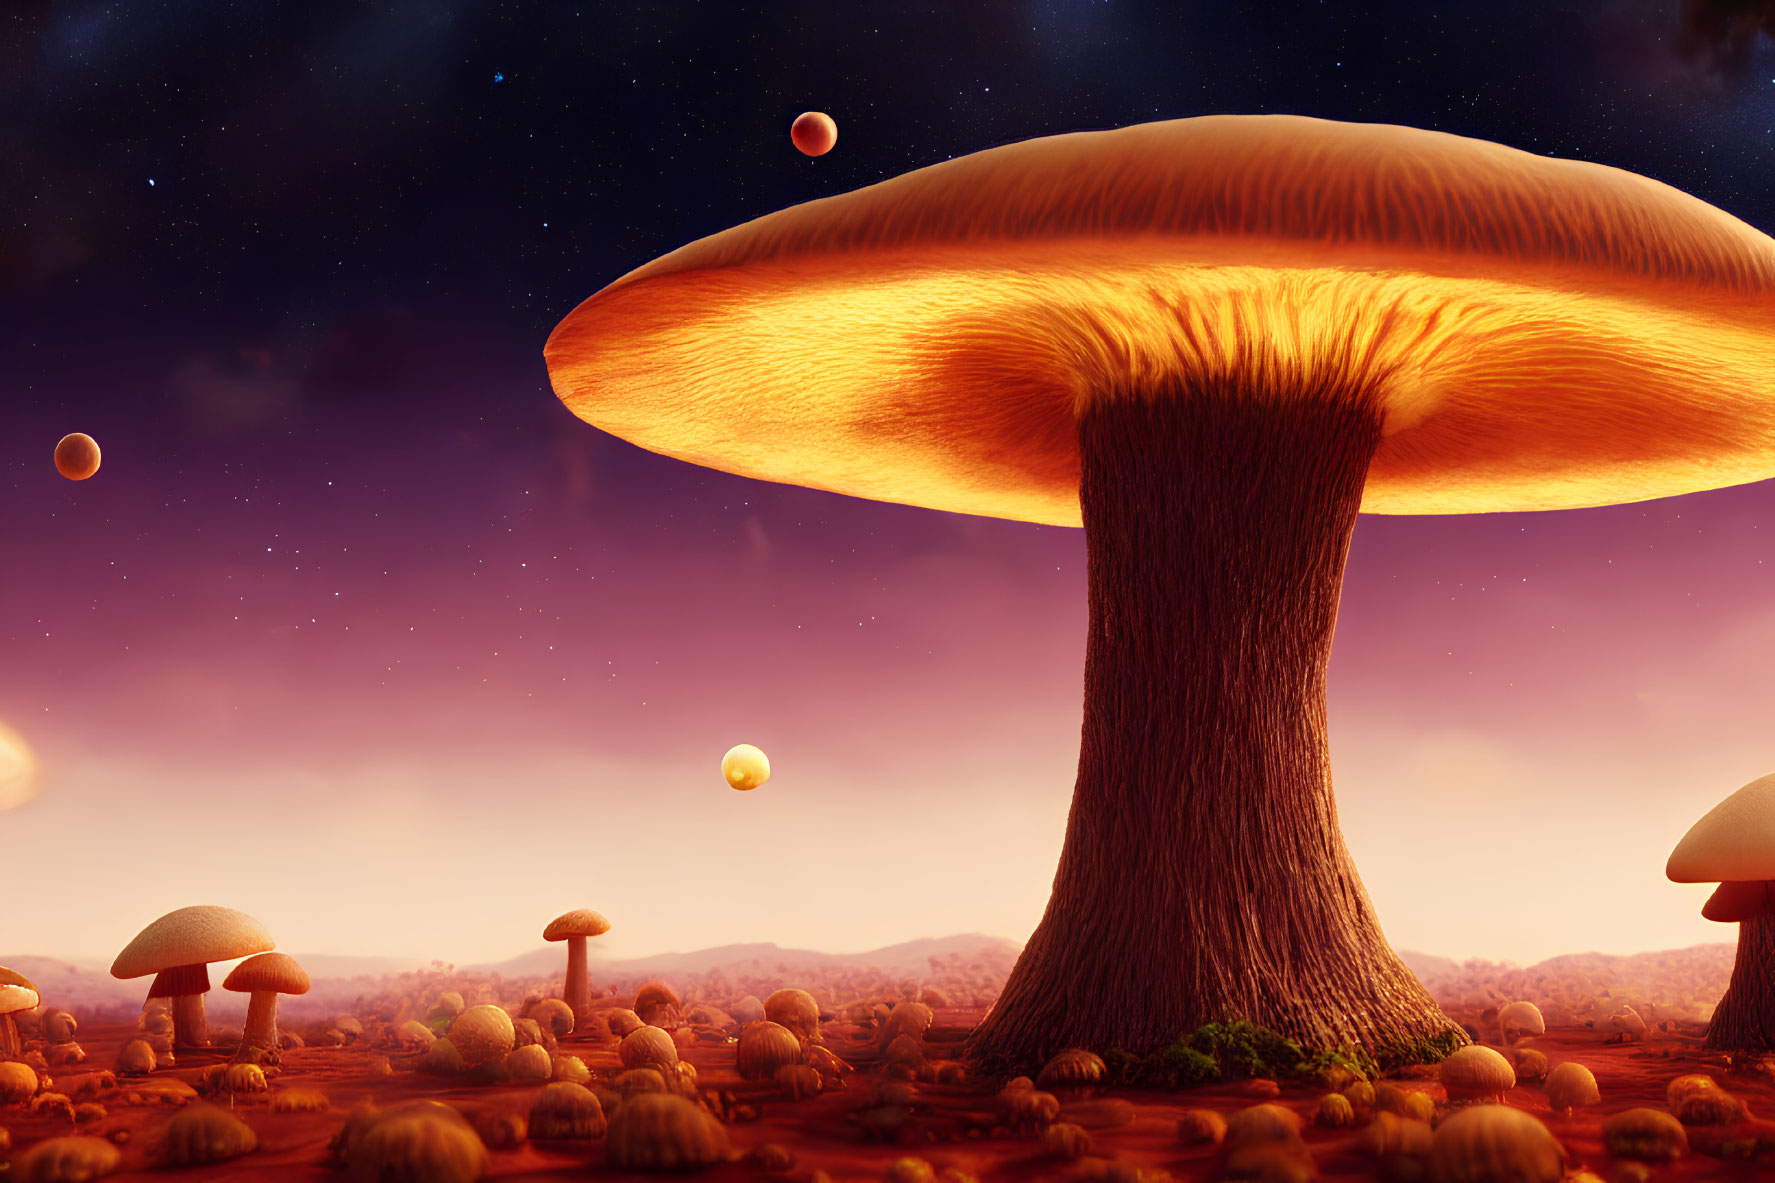 Surreal landscape featuring oversized mushrooms under dusky sky